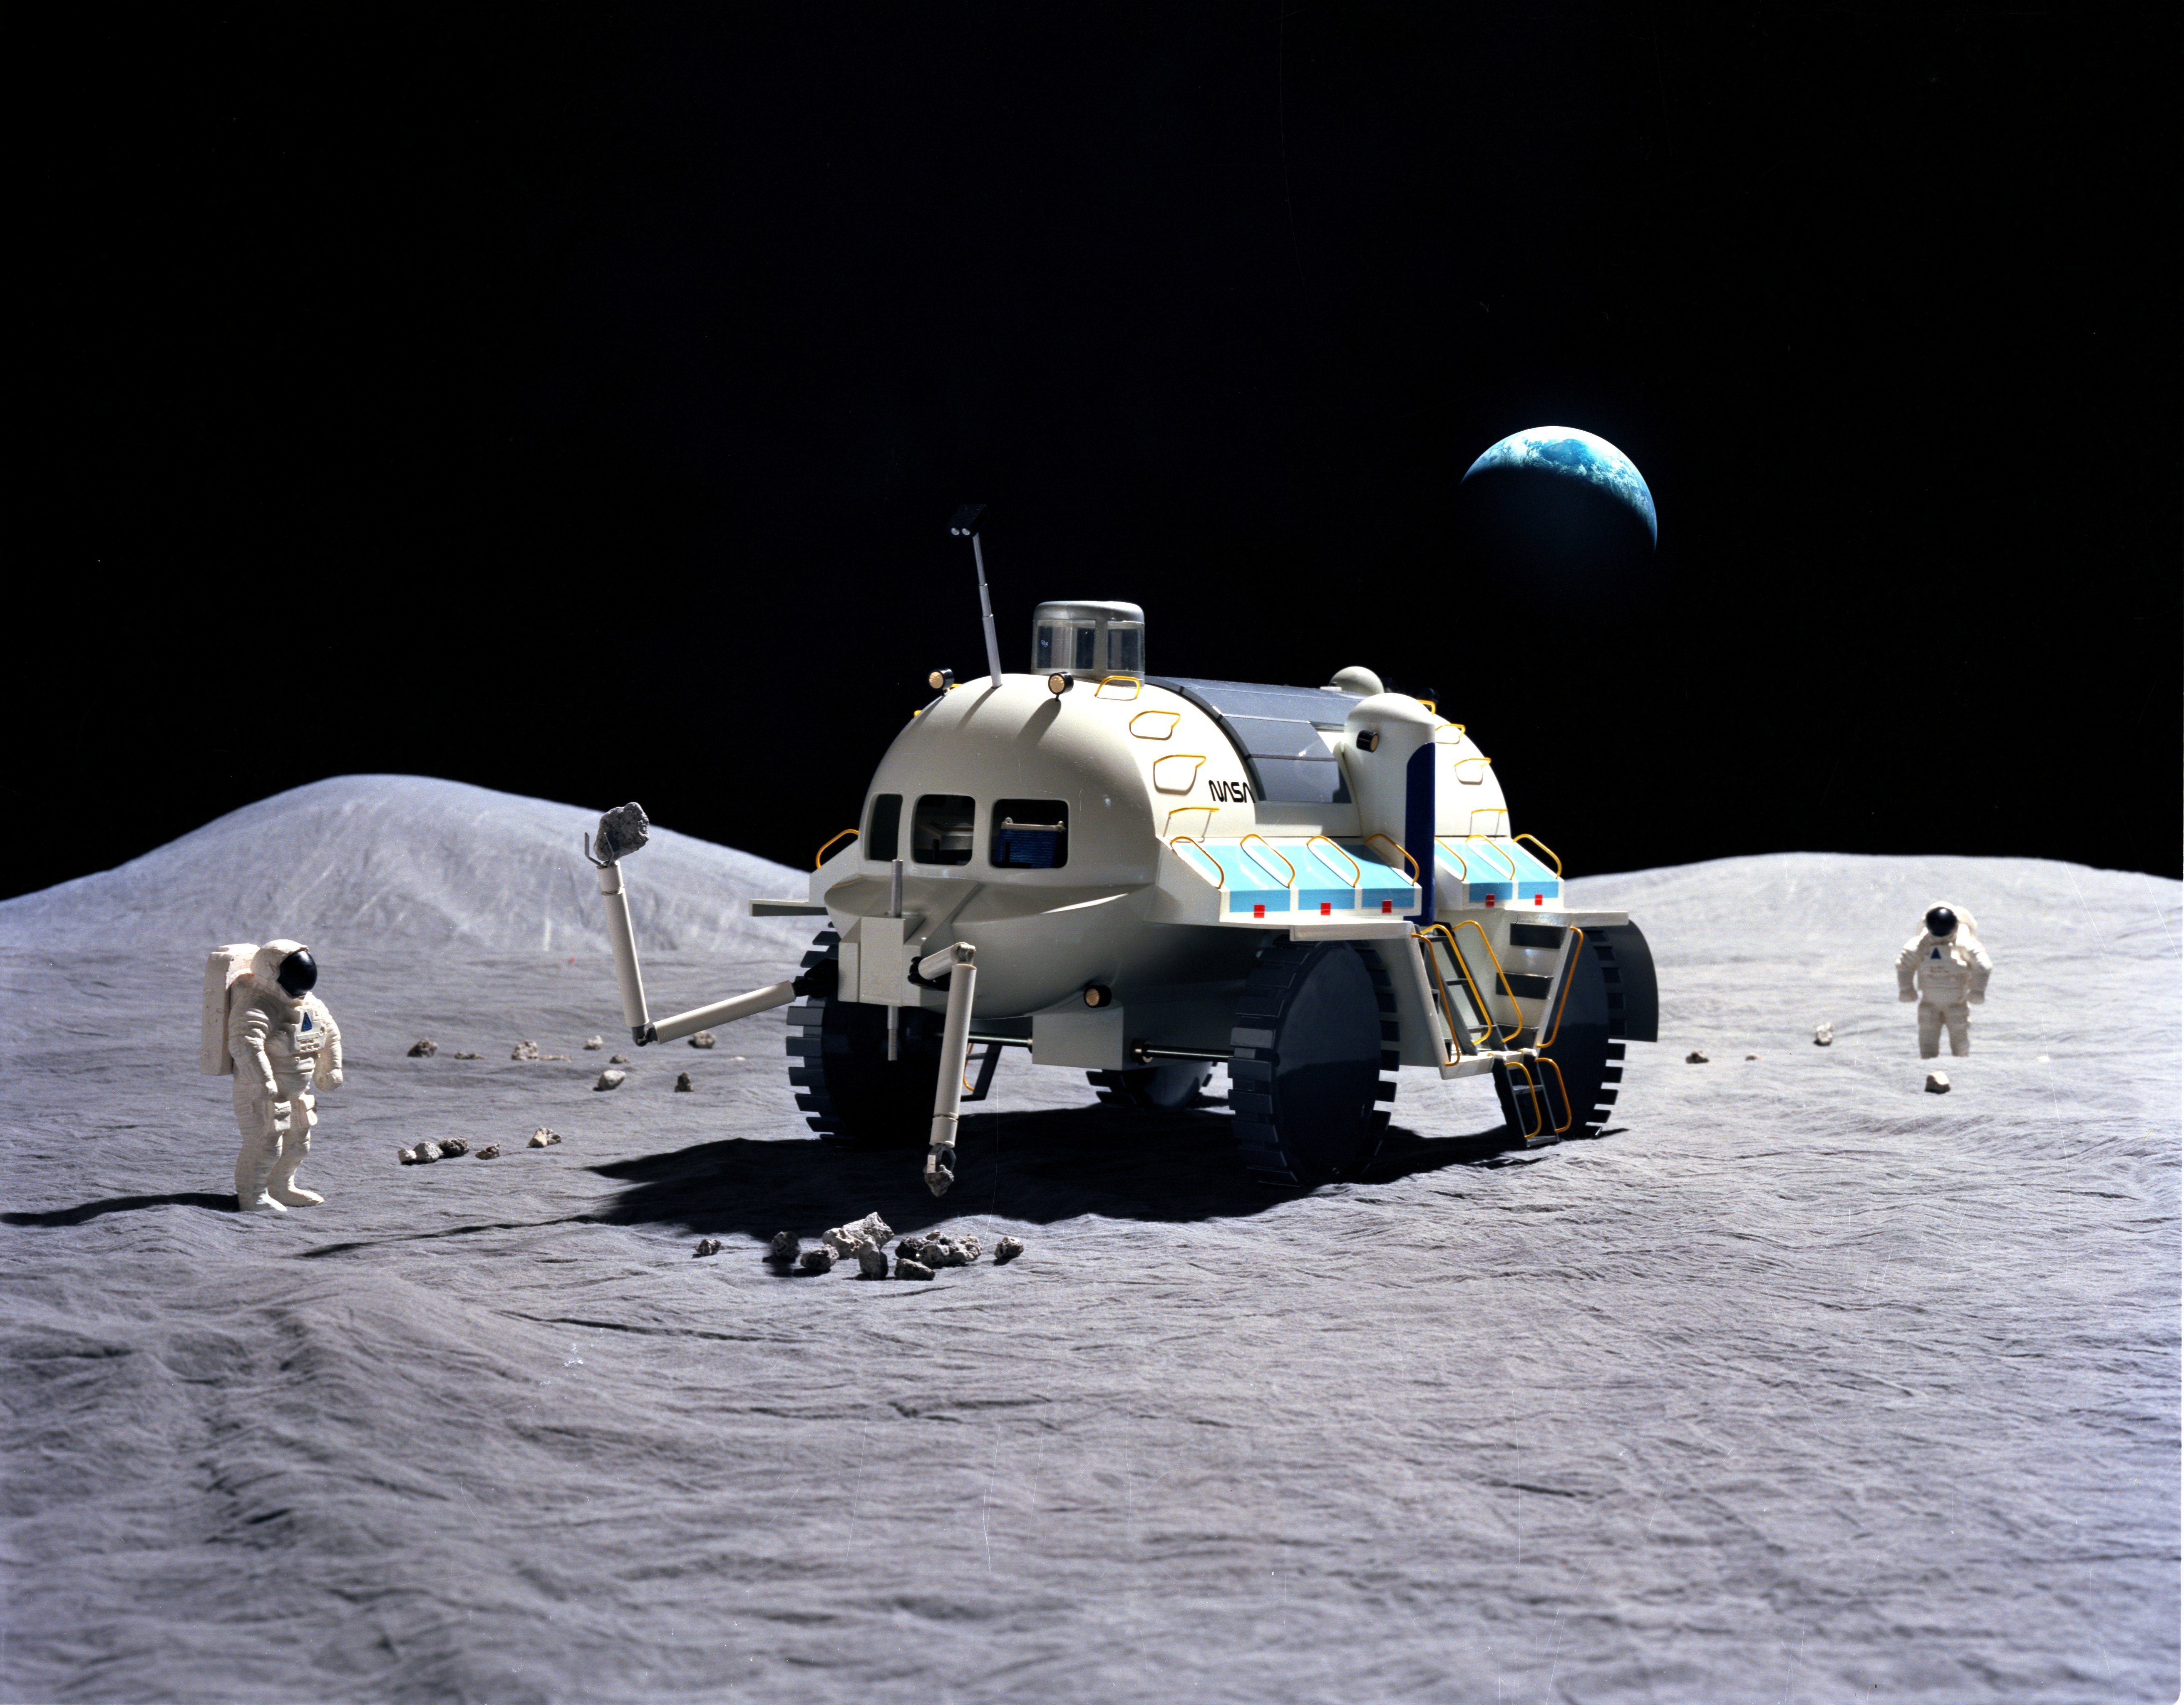 Автоматический аппарат передвигающийся по луне. Луномобиль Аполлон. Ровер Луноход. Луноход НАСА 5. Космический корабль на Луне.